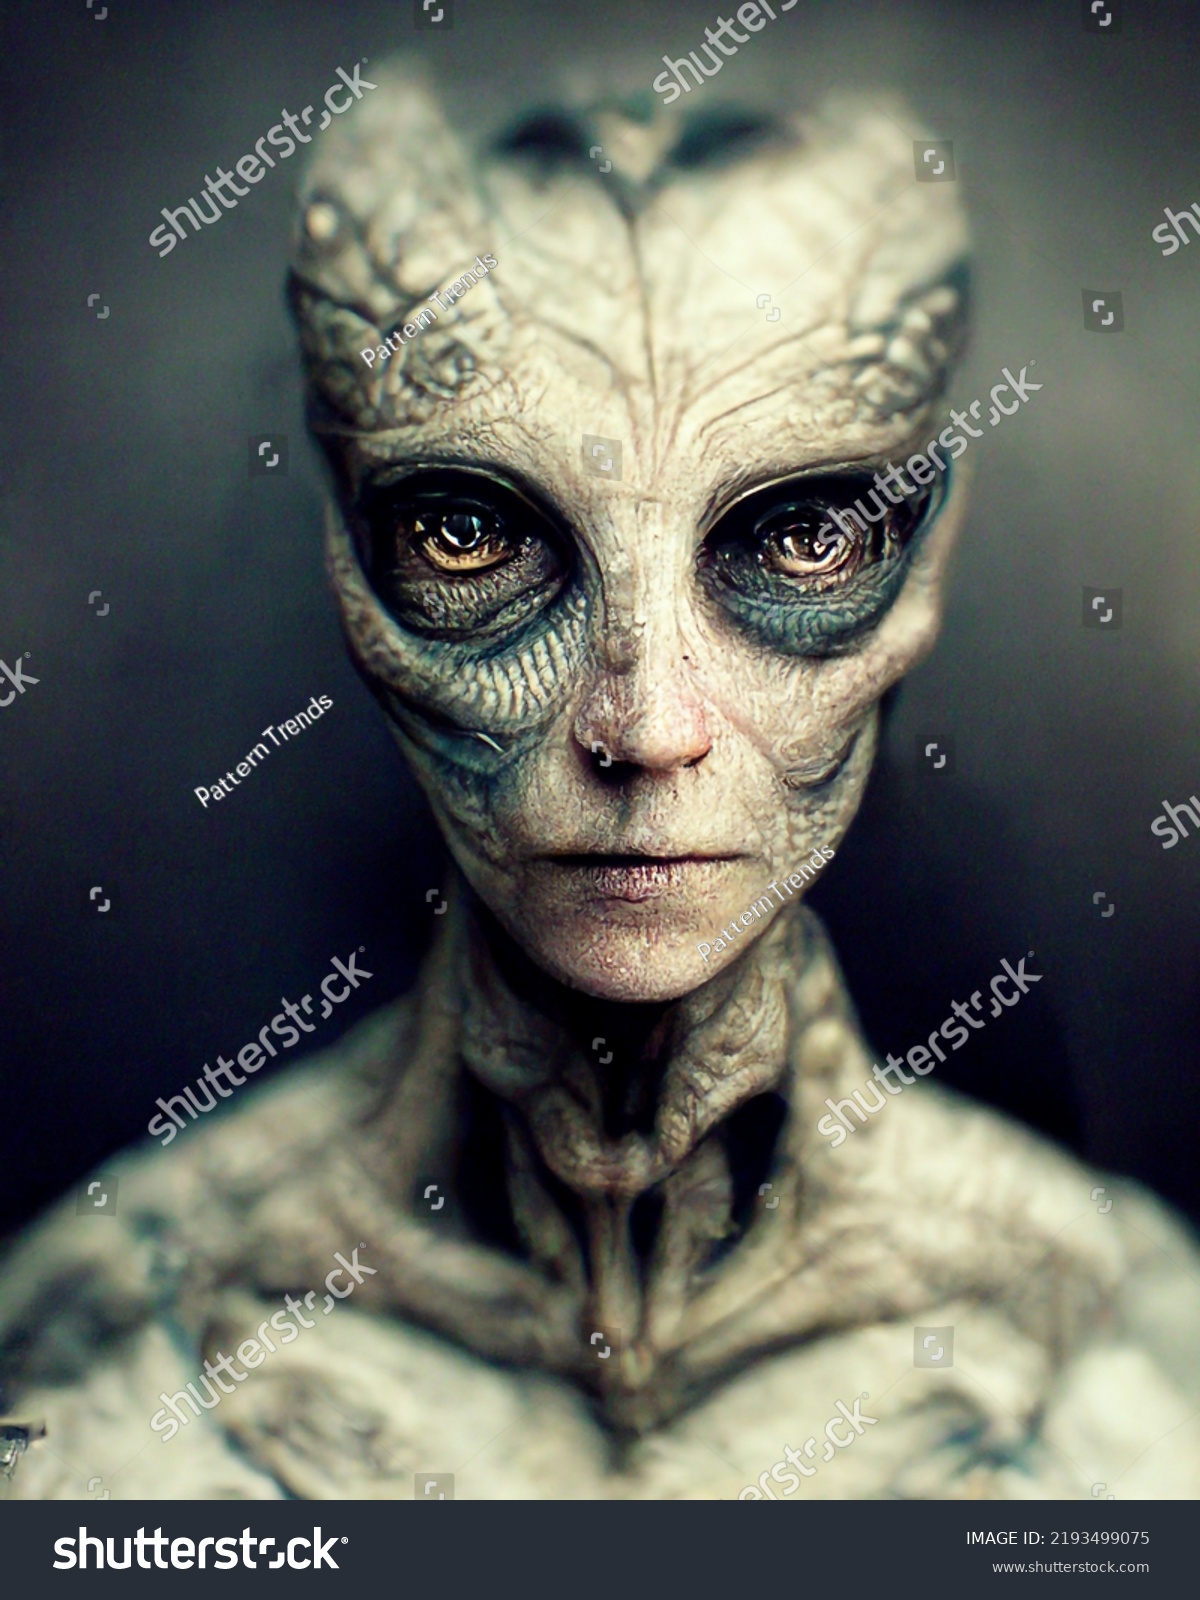 Alien Portrait Photograph Photorealistic Digital Art Stock Illustration 2193499075 Shutterstock 